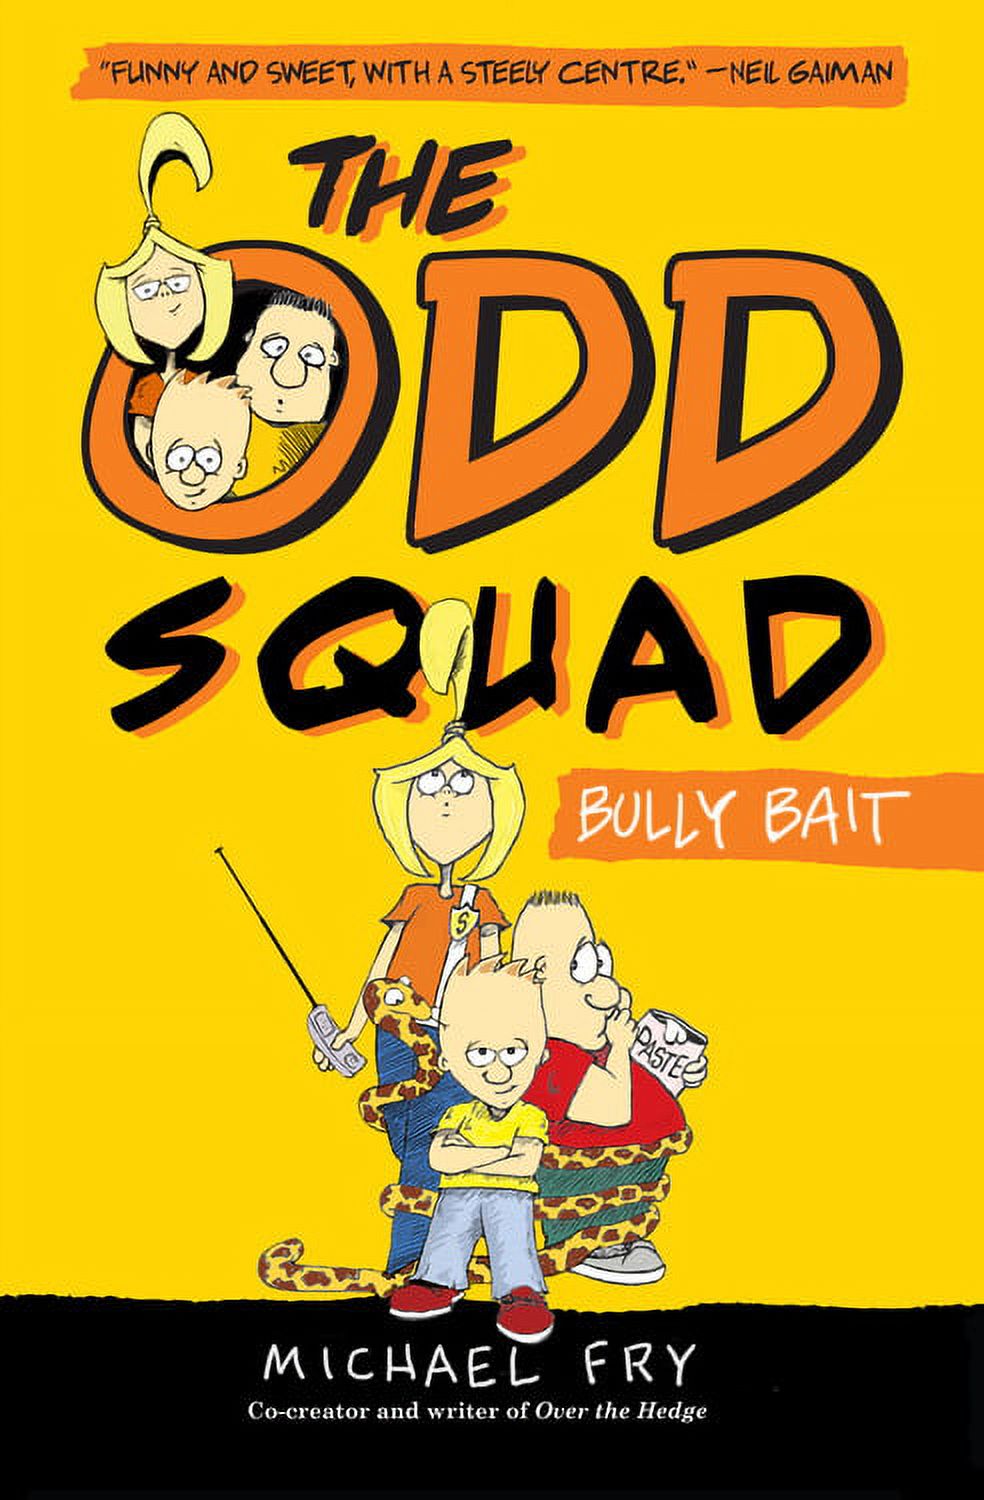 Odd Squad Book: The Odd Squad, Bully Bait (Hardcover) - image 1 of 1